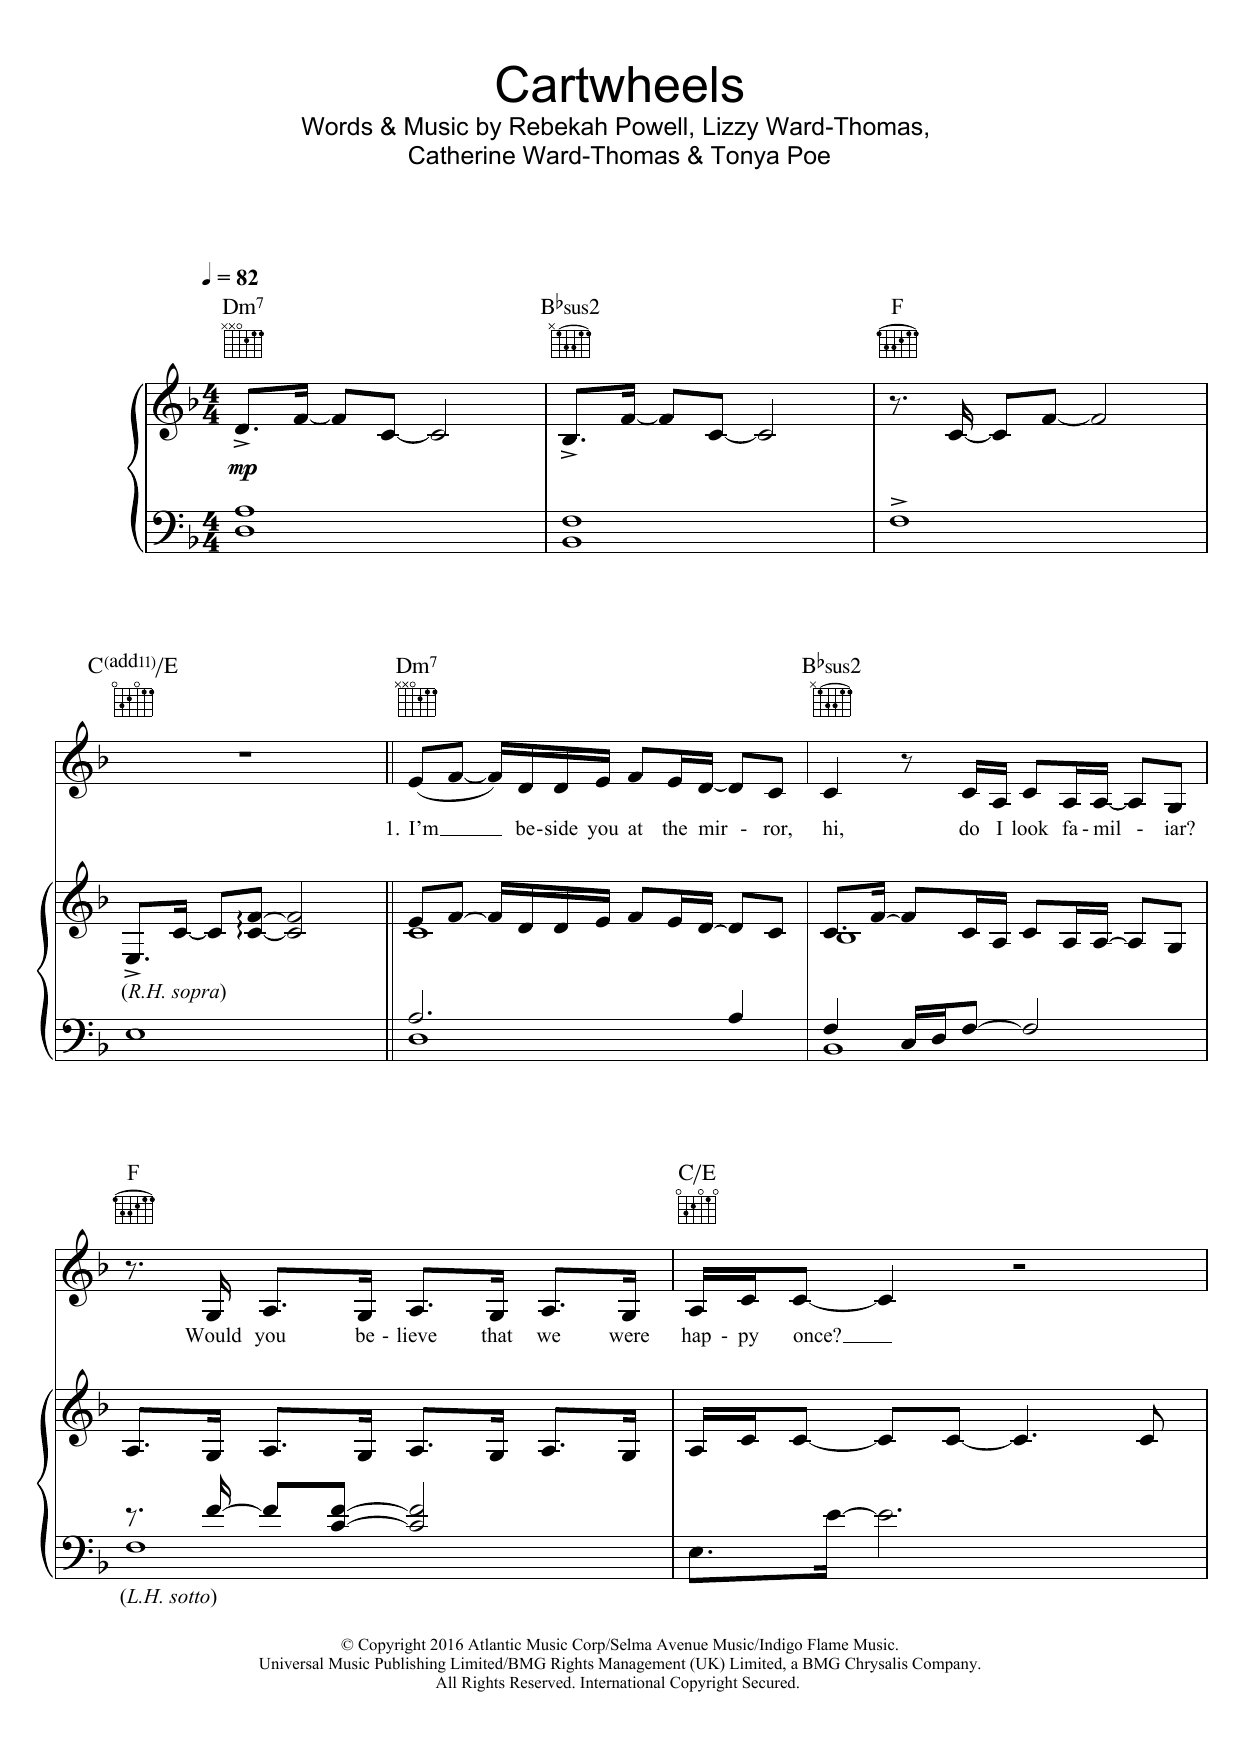 Ward Thomas Cartwheels Sheet Music Notes & Chords for Piano, Vocal & Guitar (Right-Hand Melody) - Download or Print PDF